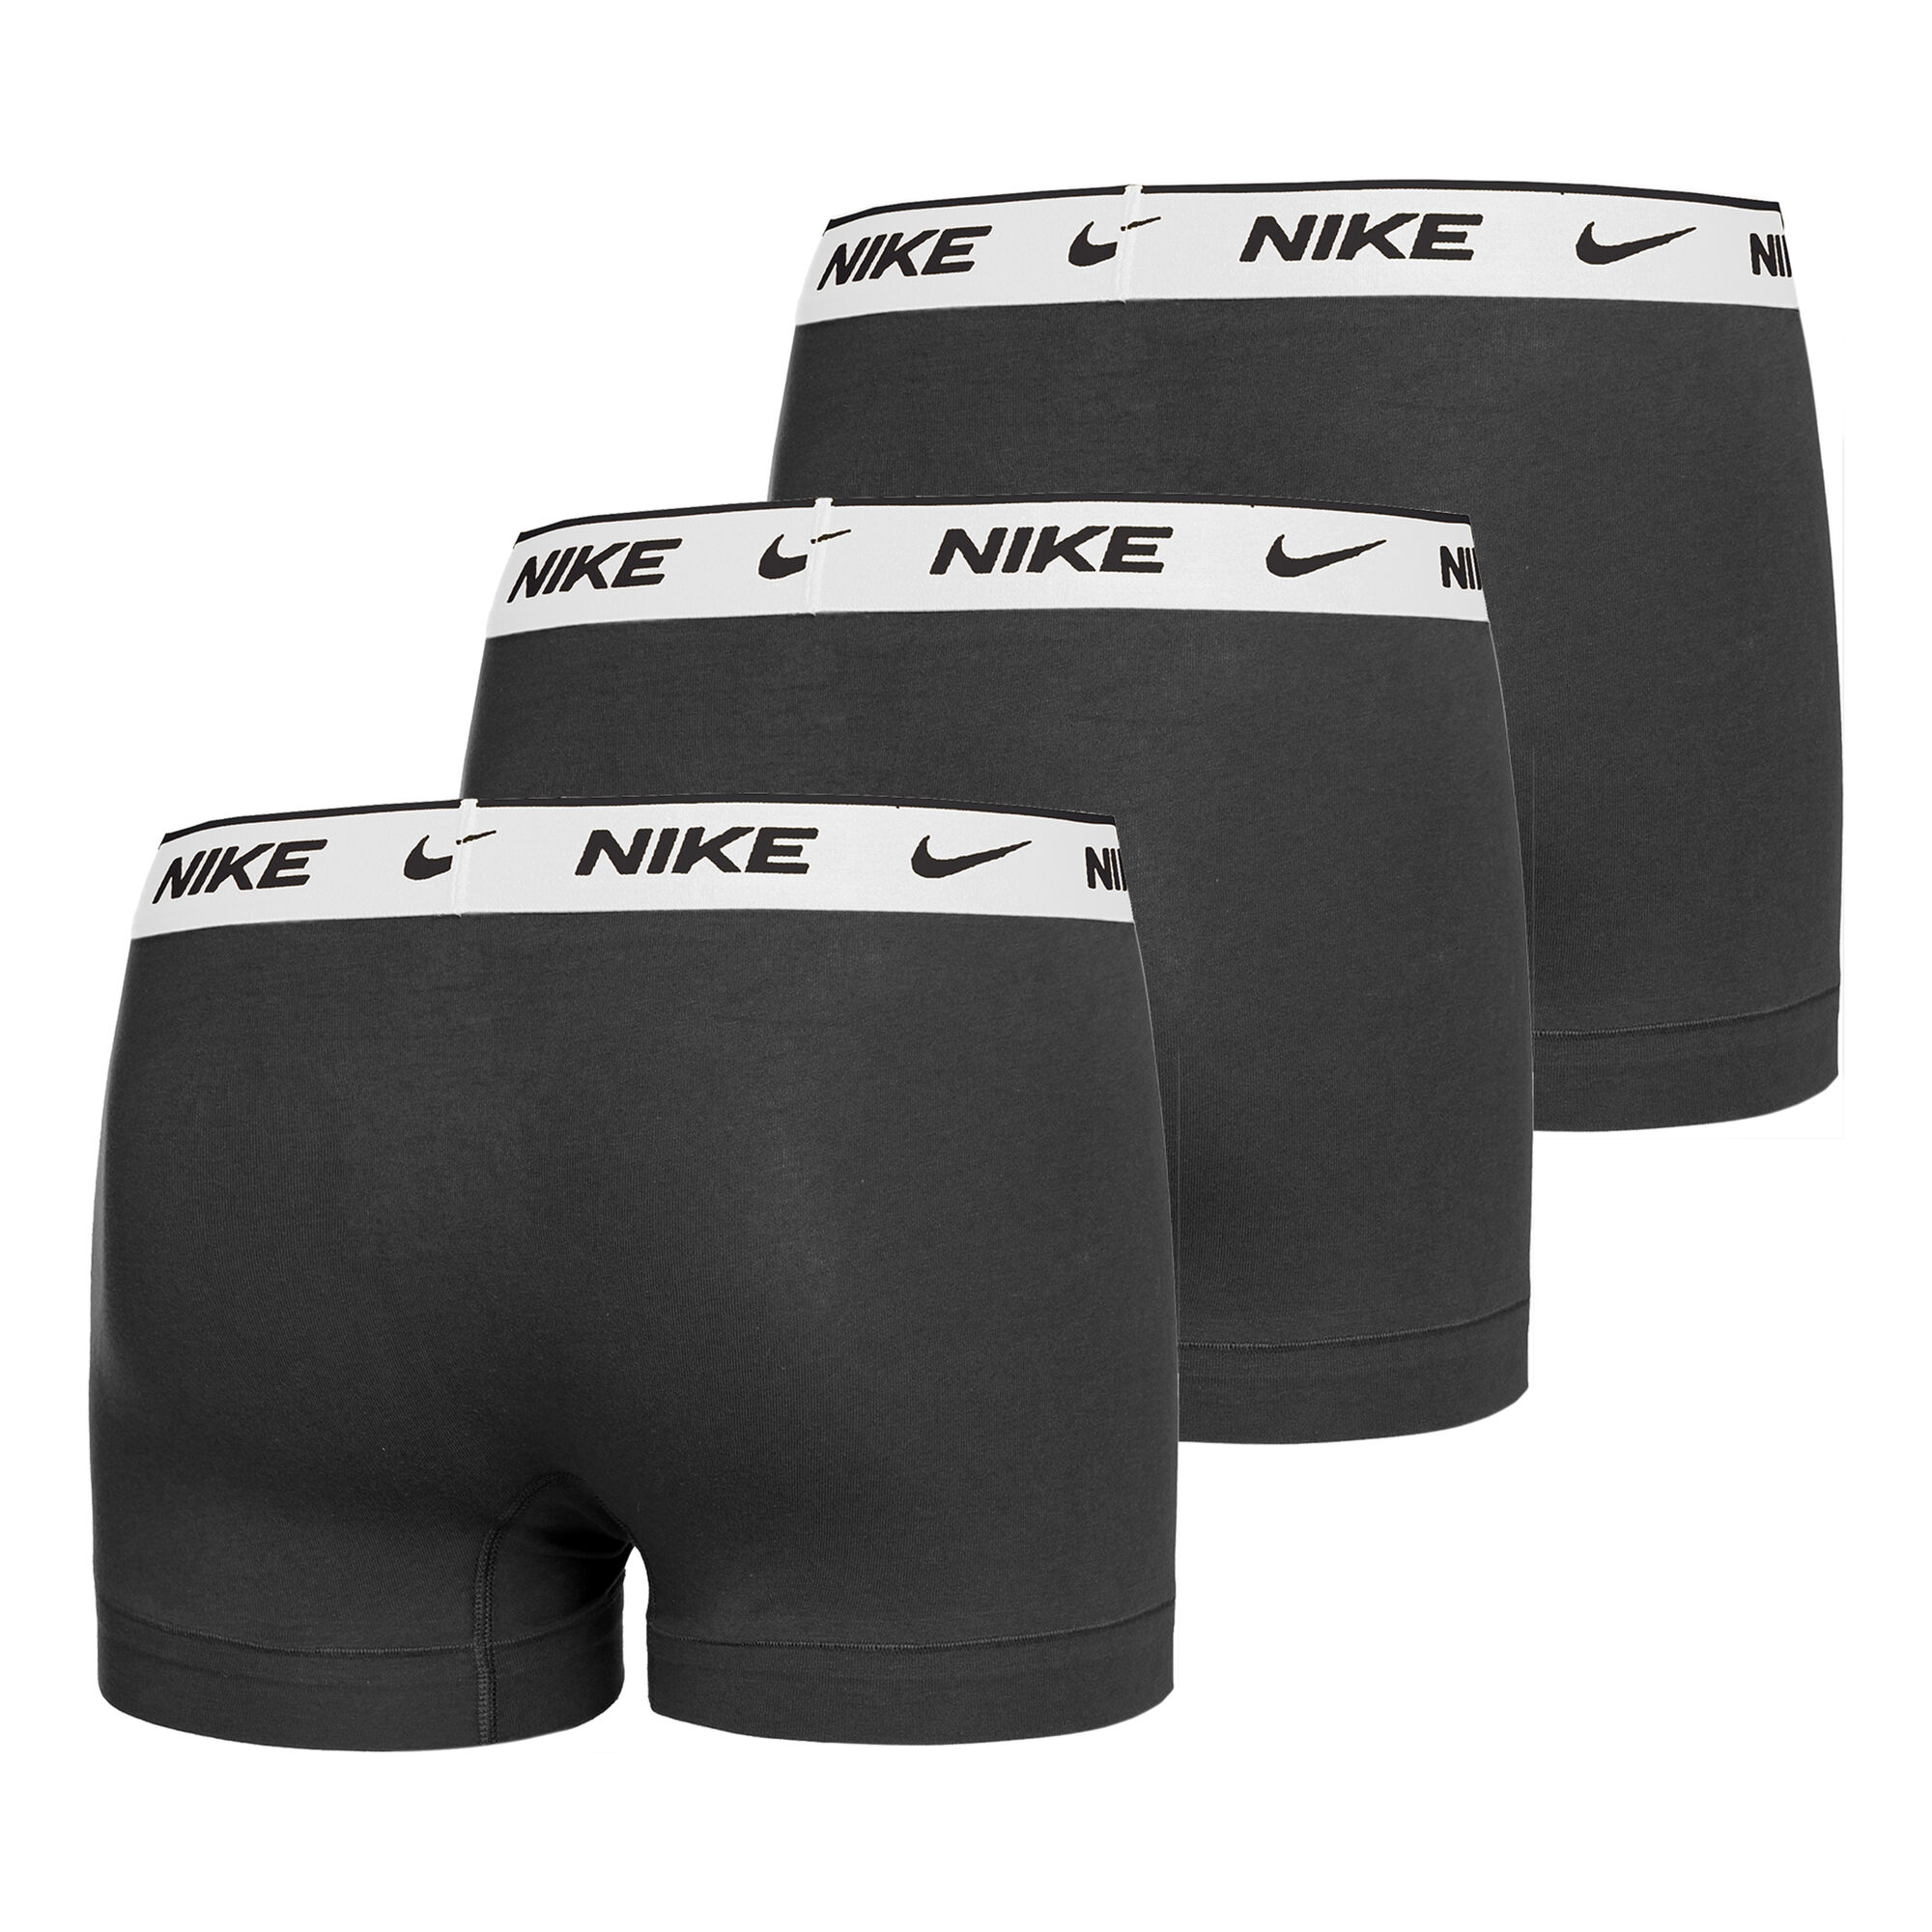 Buy Nike Everyday Stretch Trunk Boxer Shorts 3 Pack Men Black, White online